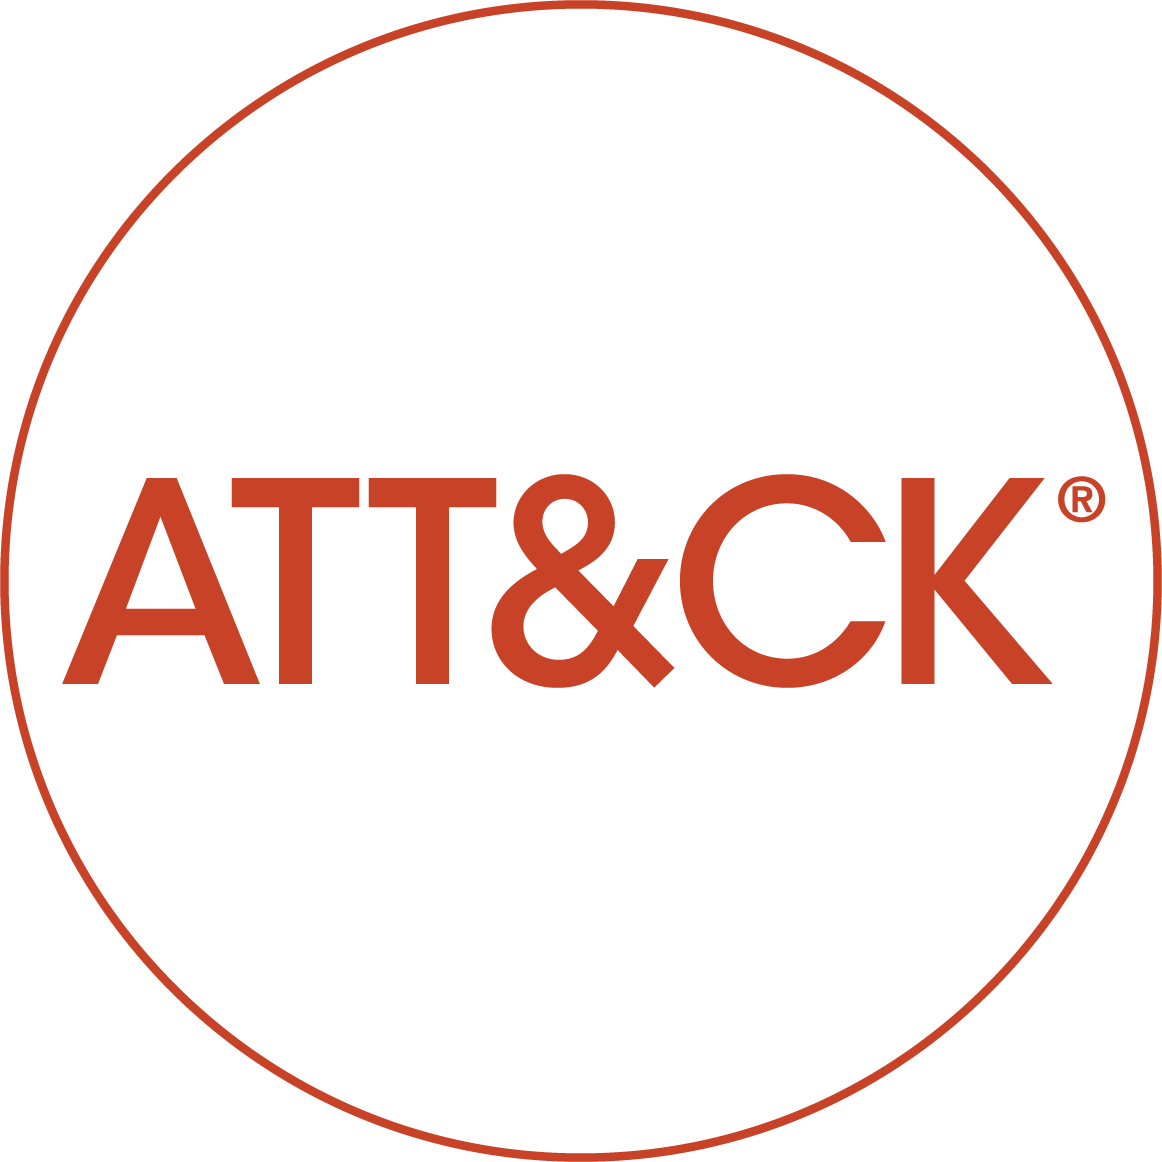 VSCode ATT&CK